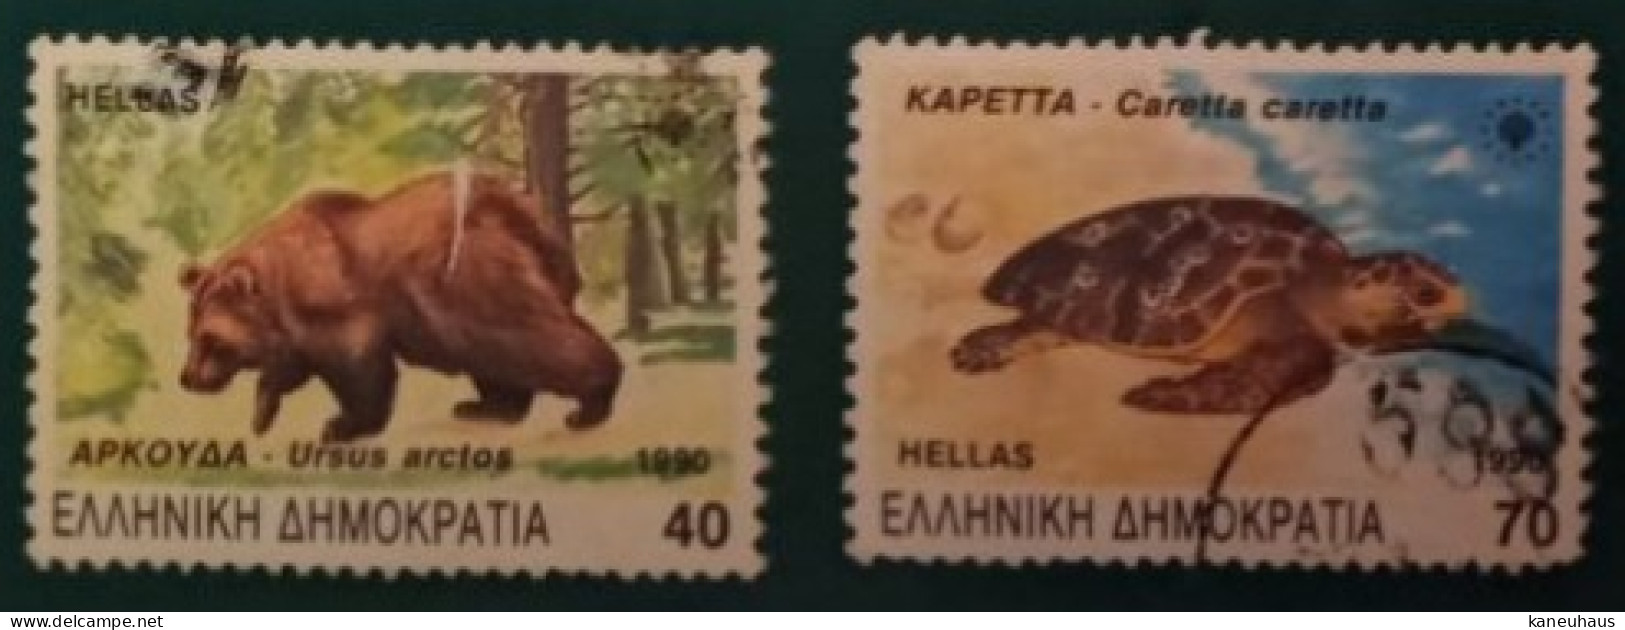 1990 Michel-Nr. 1738-1739 Gestempelt - Used Stamps